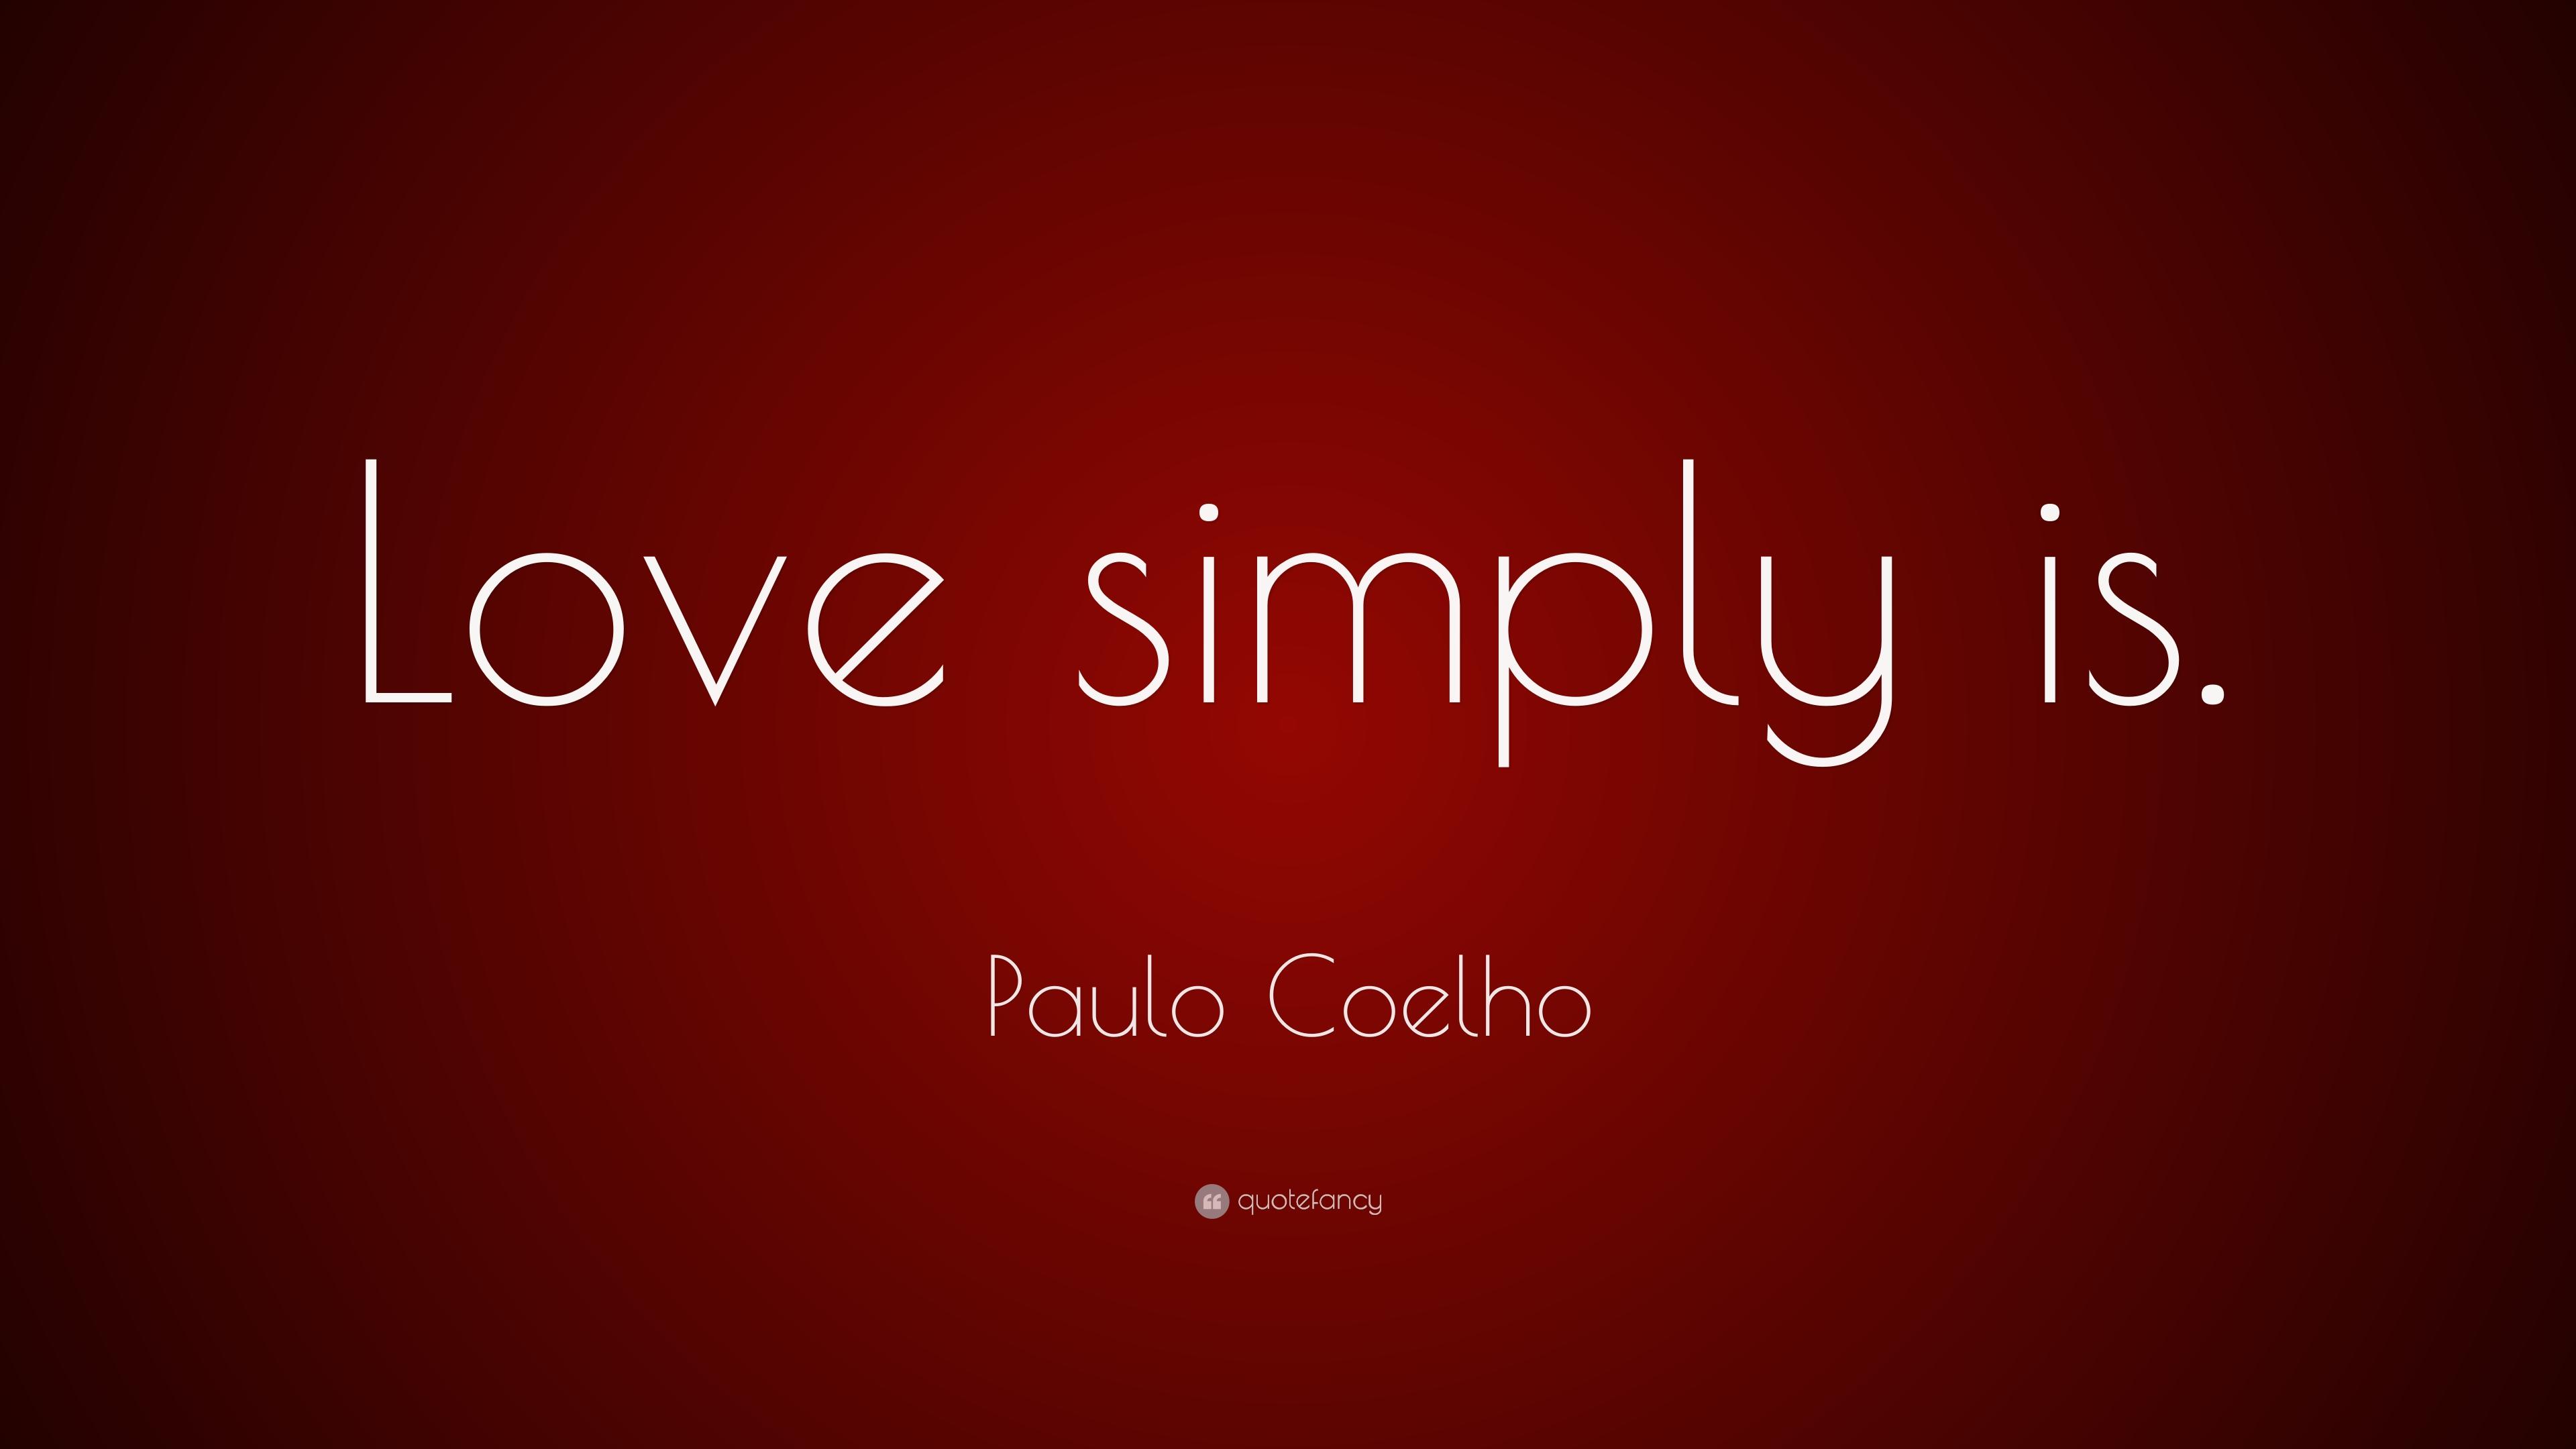 Paulo Coelho Quote: “Love simply is.” (18 wallpaper)